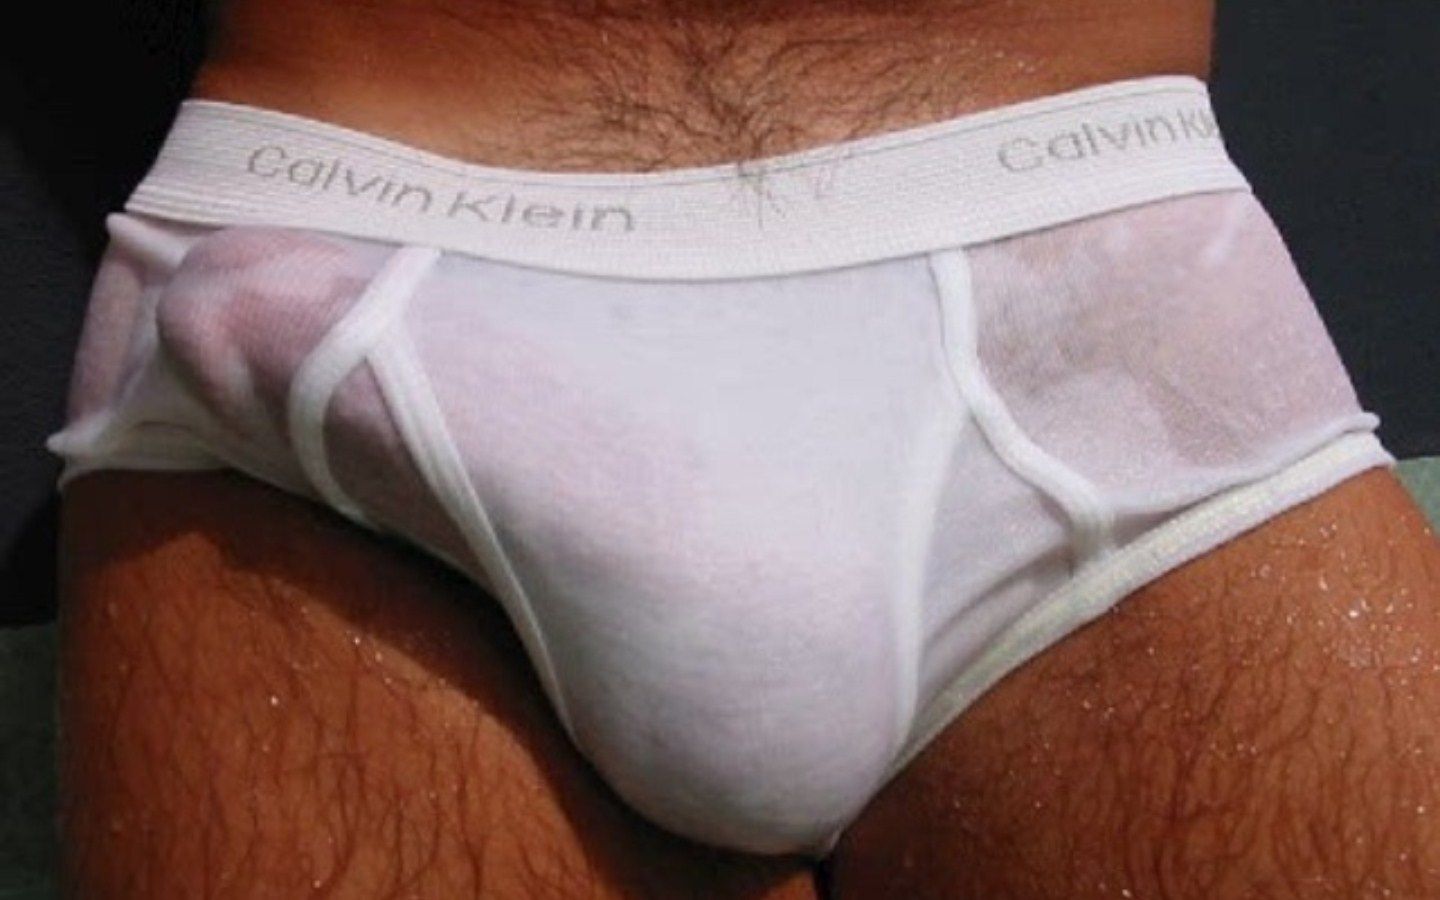 Wet white cotton panties